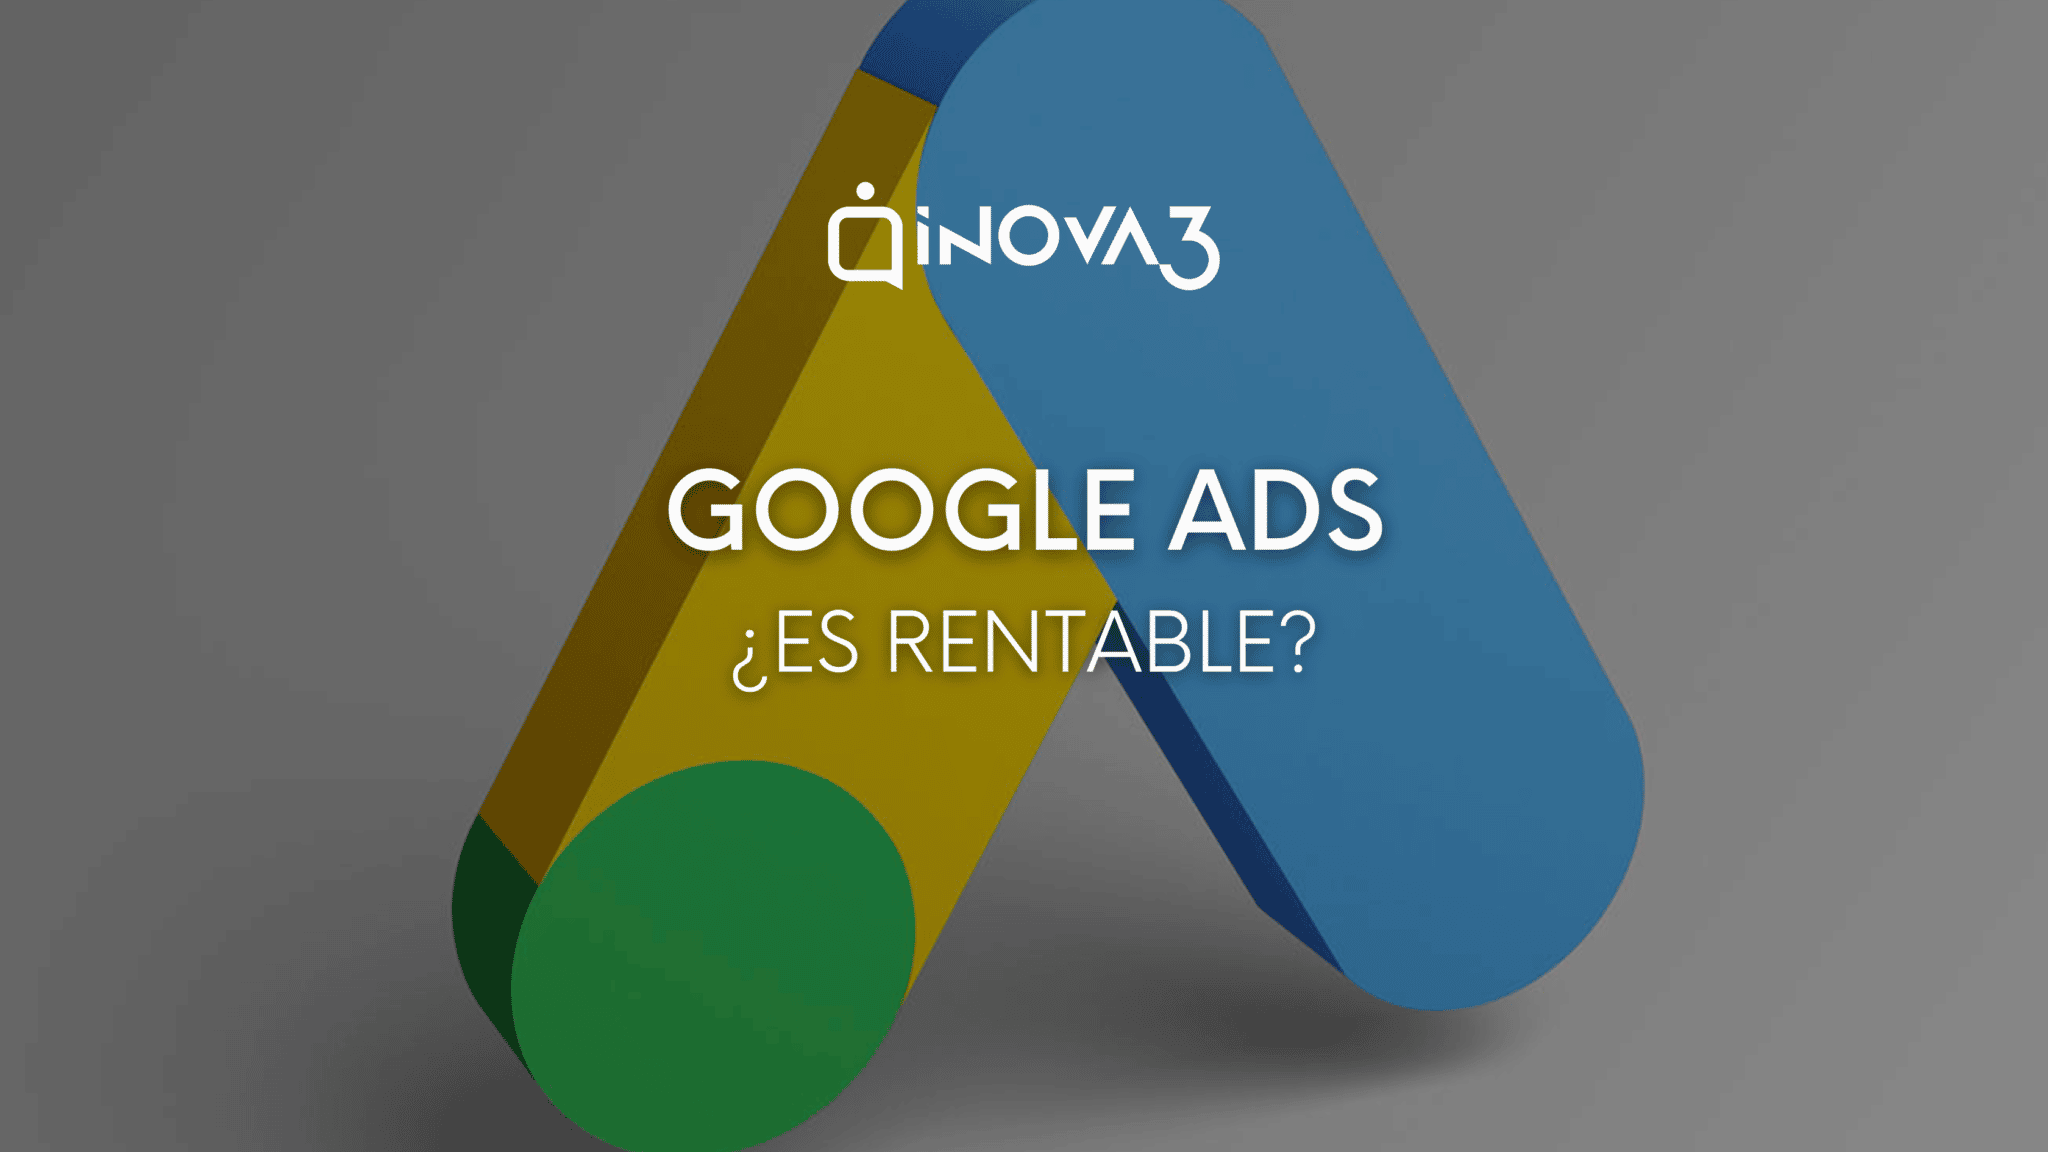 ¿Es rentable Google Ads? Ventajas de Google Ads en 2023. Inova3 responde